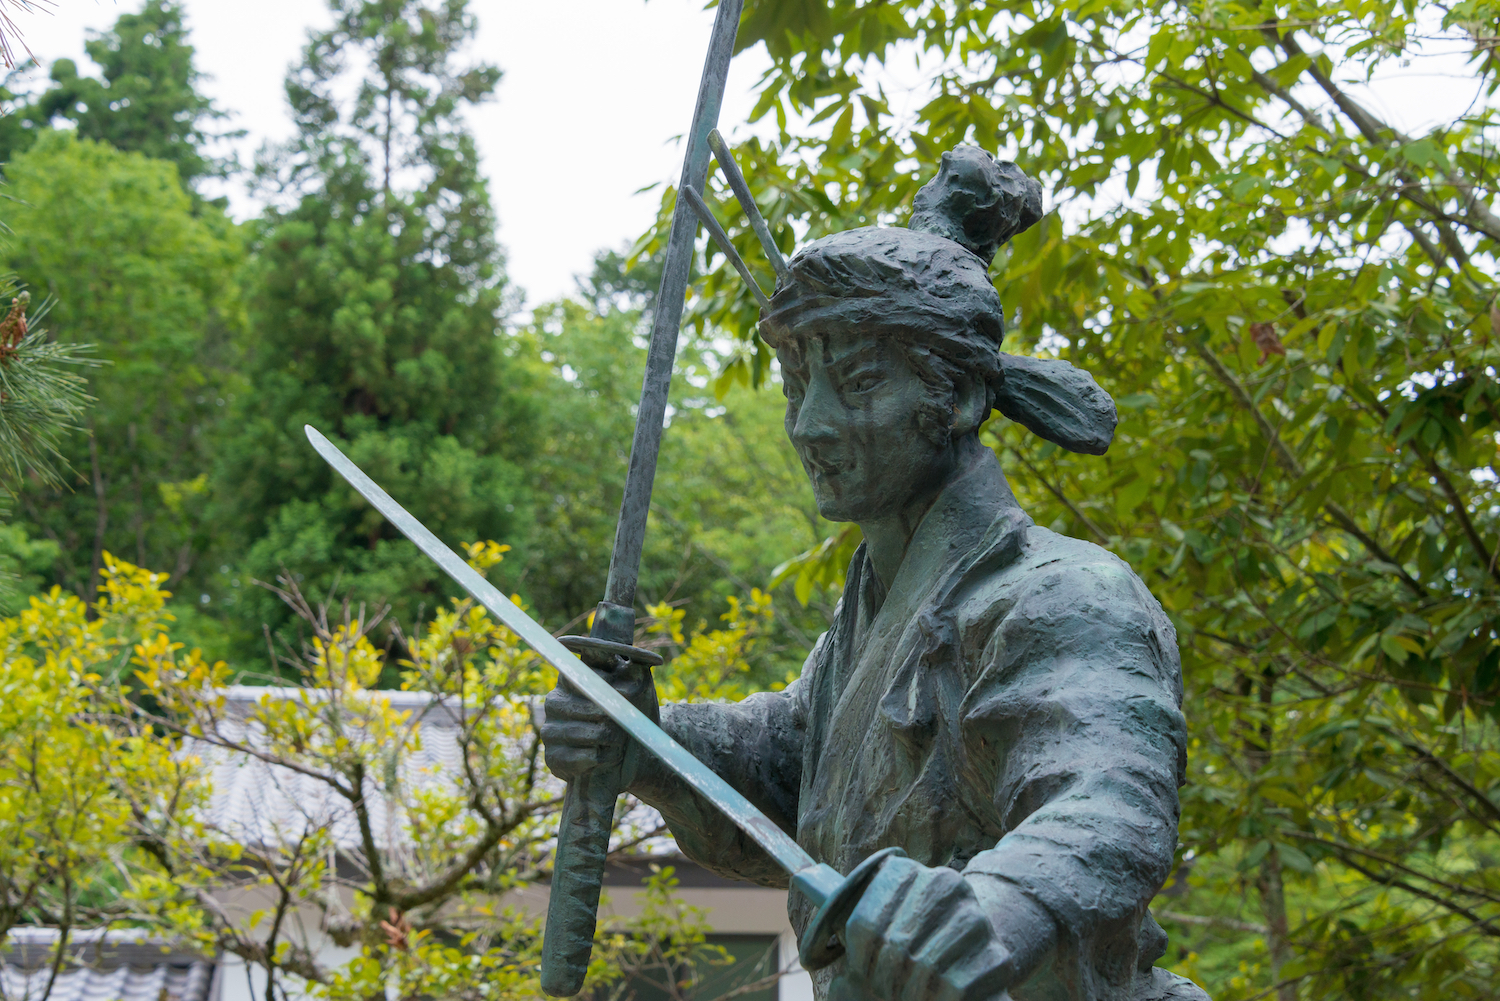 Kyoto, Japan - Mar 27 2019 - Miyamoto Musashi Statue at Hachidai-Jinja Shrine in Kyoto, Japan. Miyamoto Musashi (1584-1645) was a Japanese swordsman, philosopher, strategist, writer and ronin.